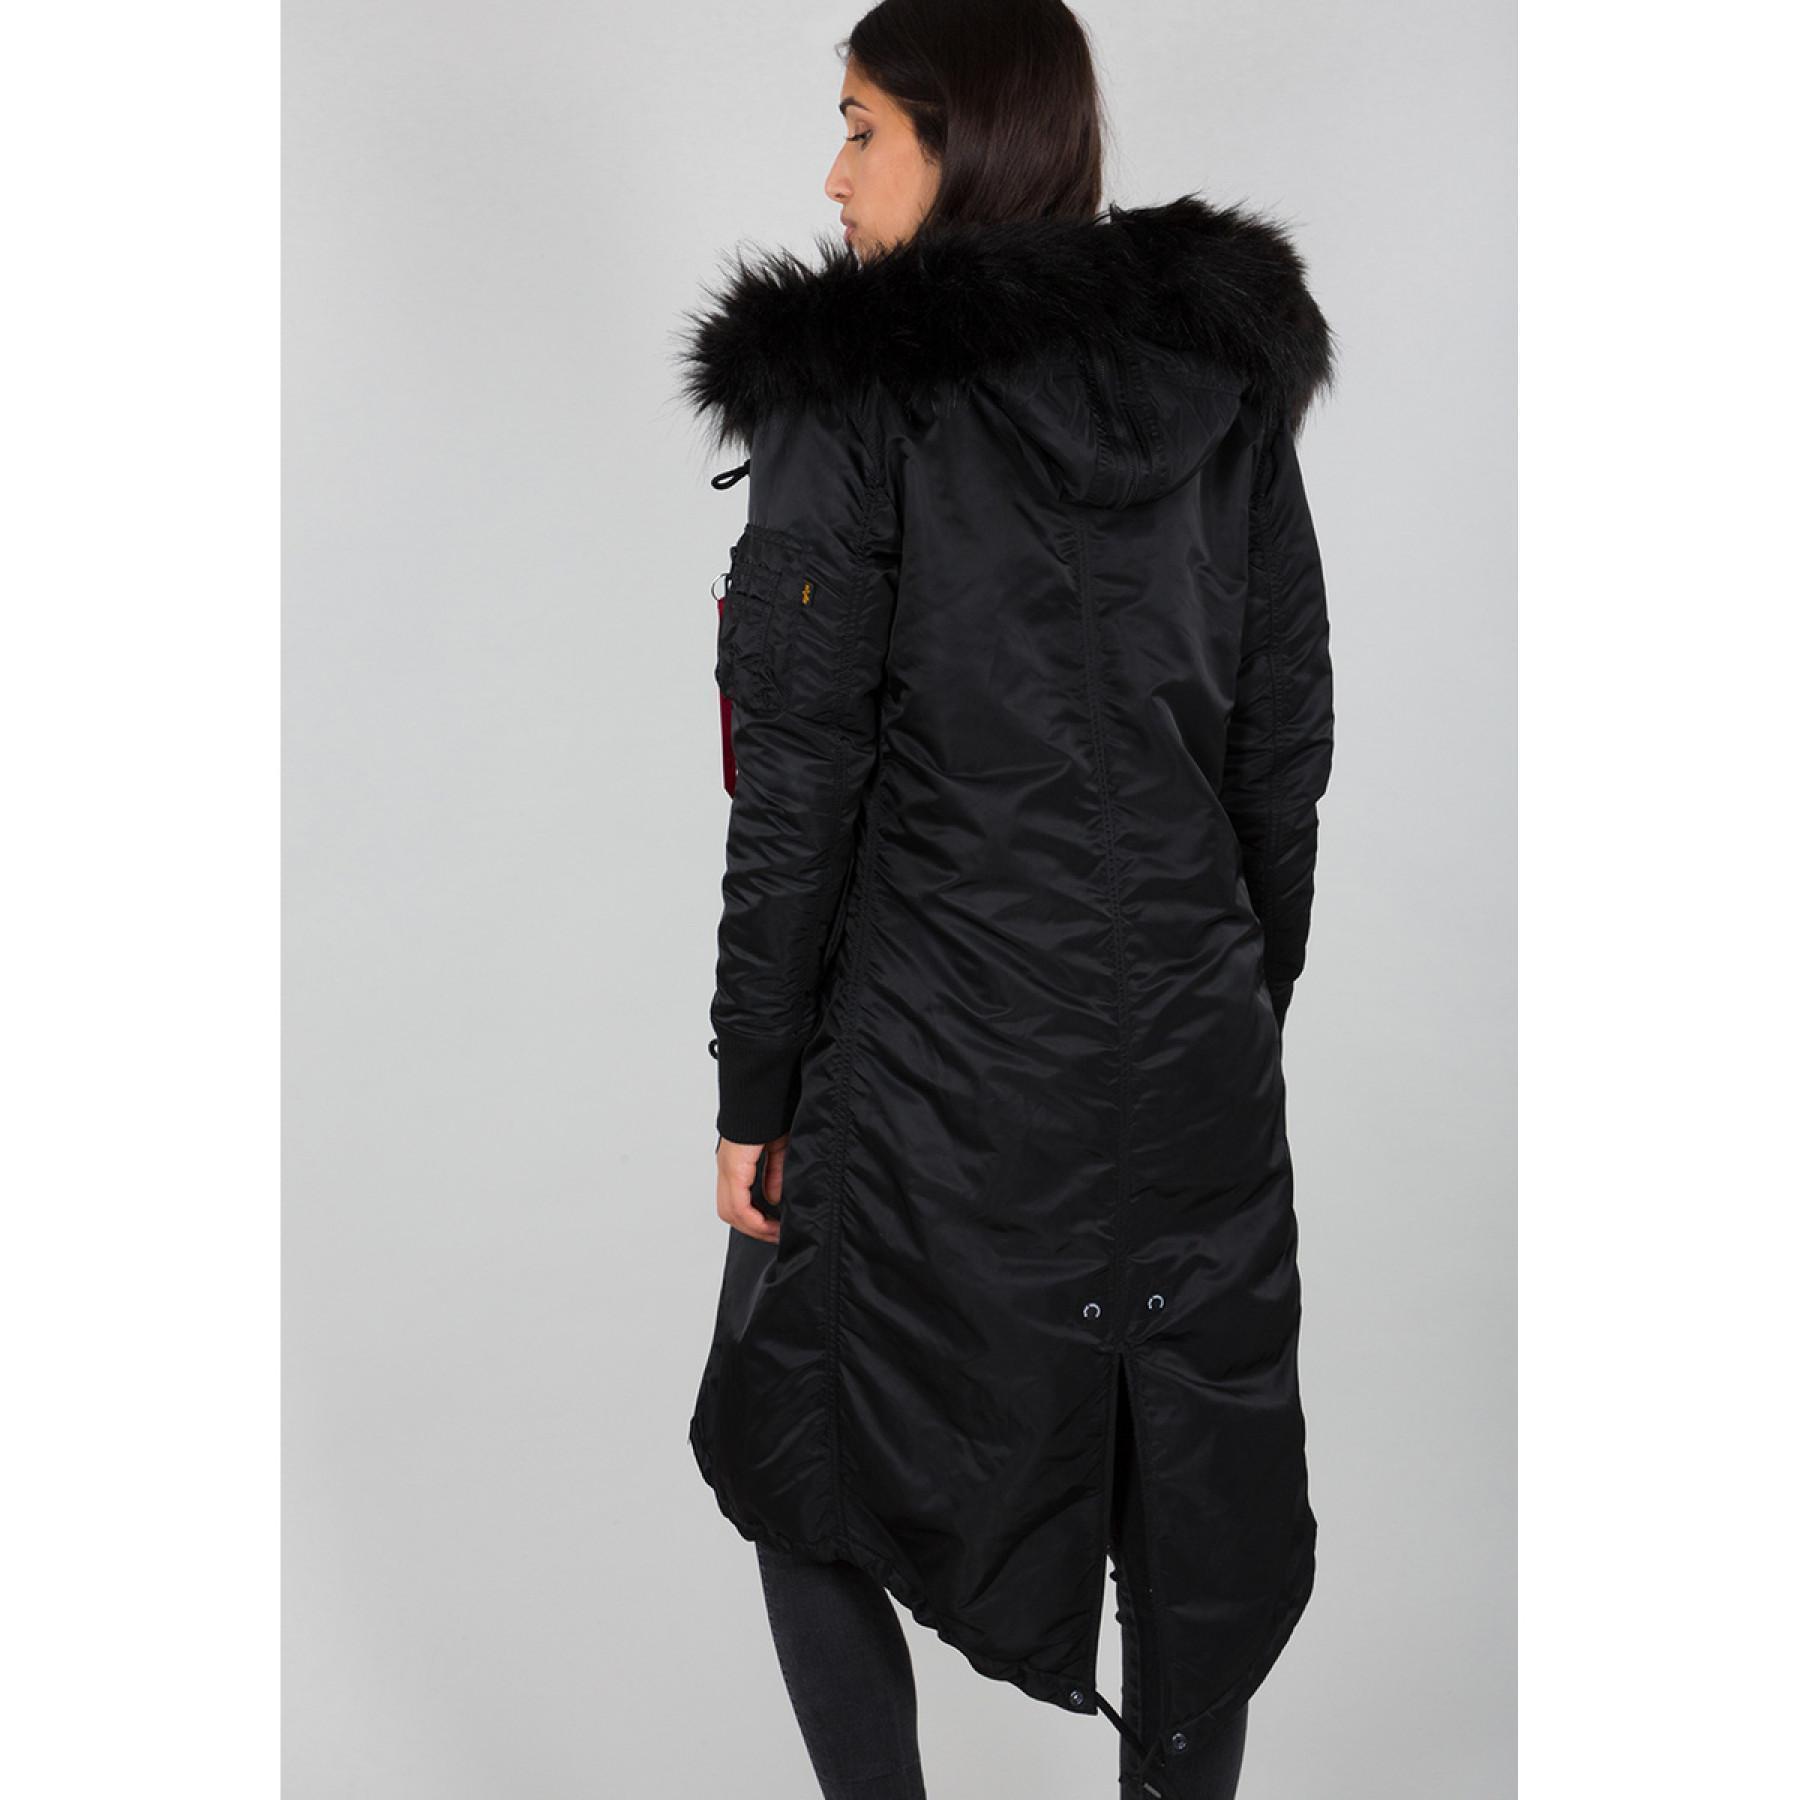 - Women\'s Jackets Fishtail - Industries parka Women & Clothing - Long Coats Alpha